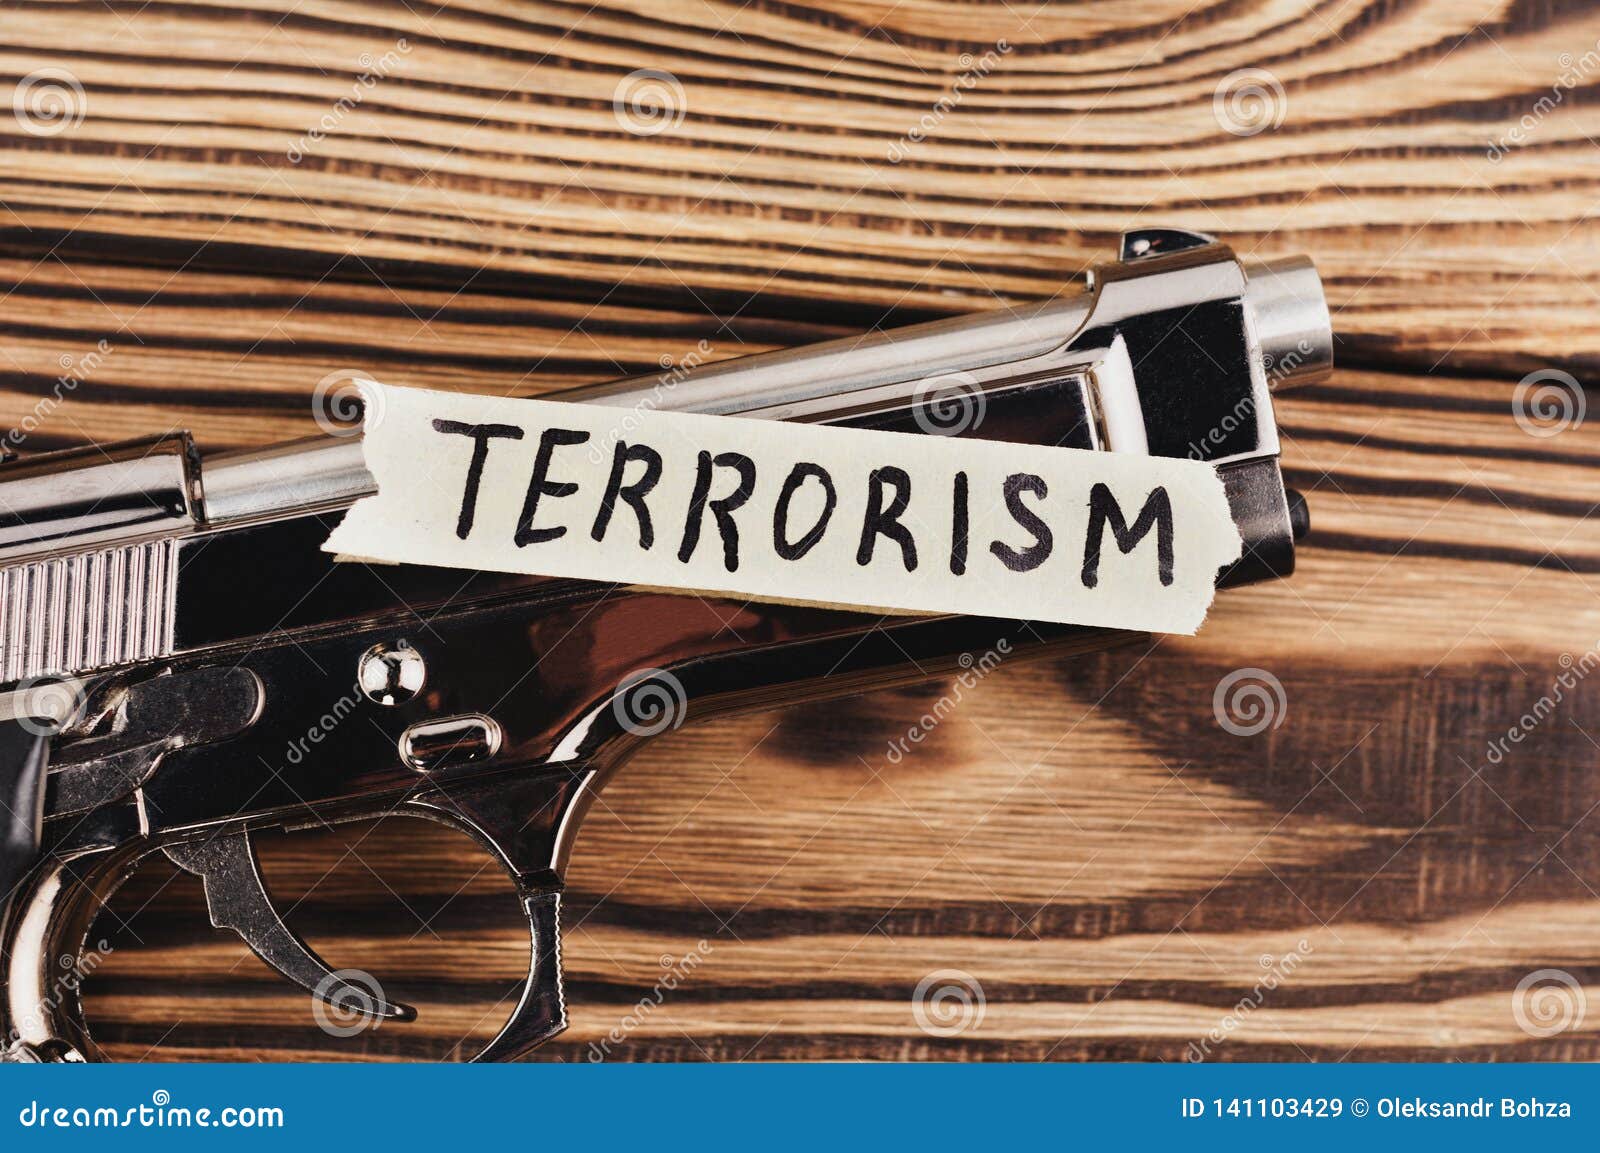 terrorism paper